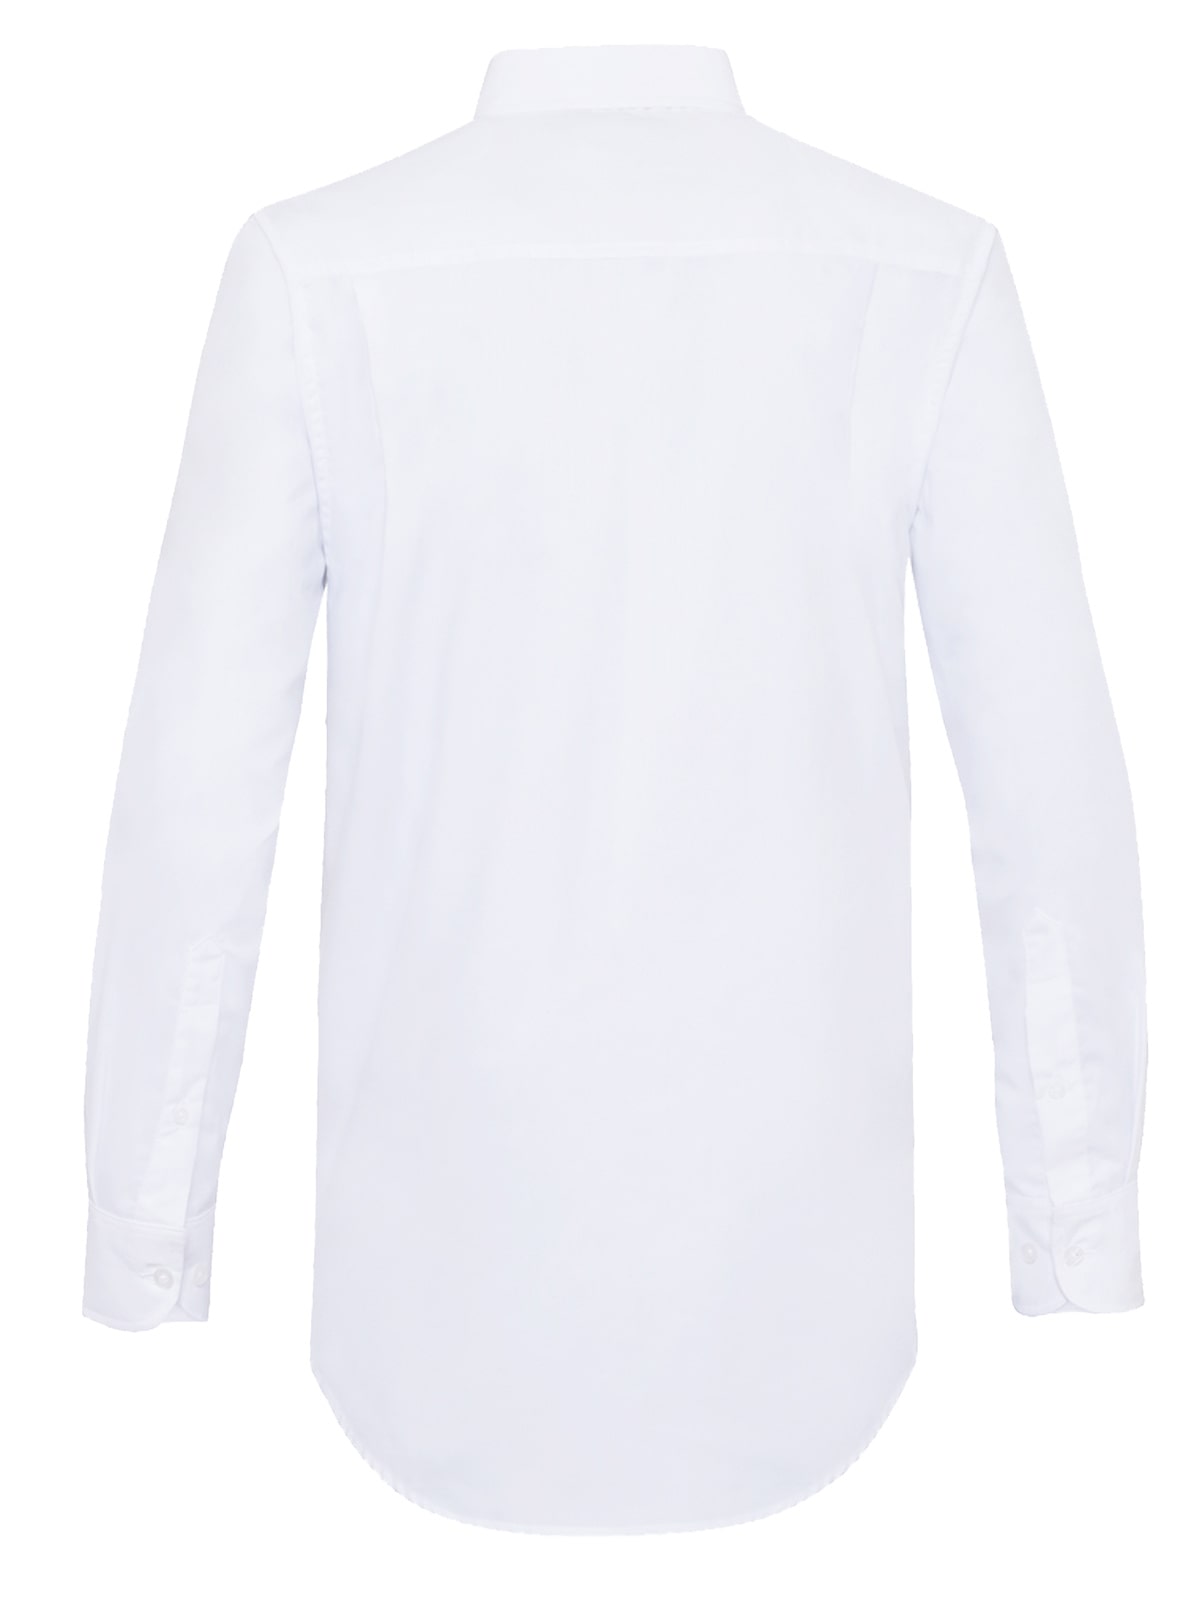 Long sleeve white oxford shirts